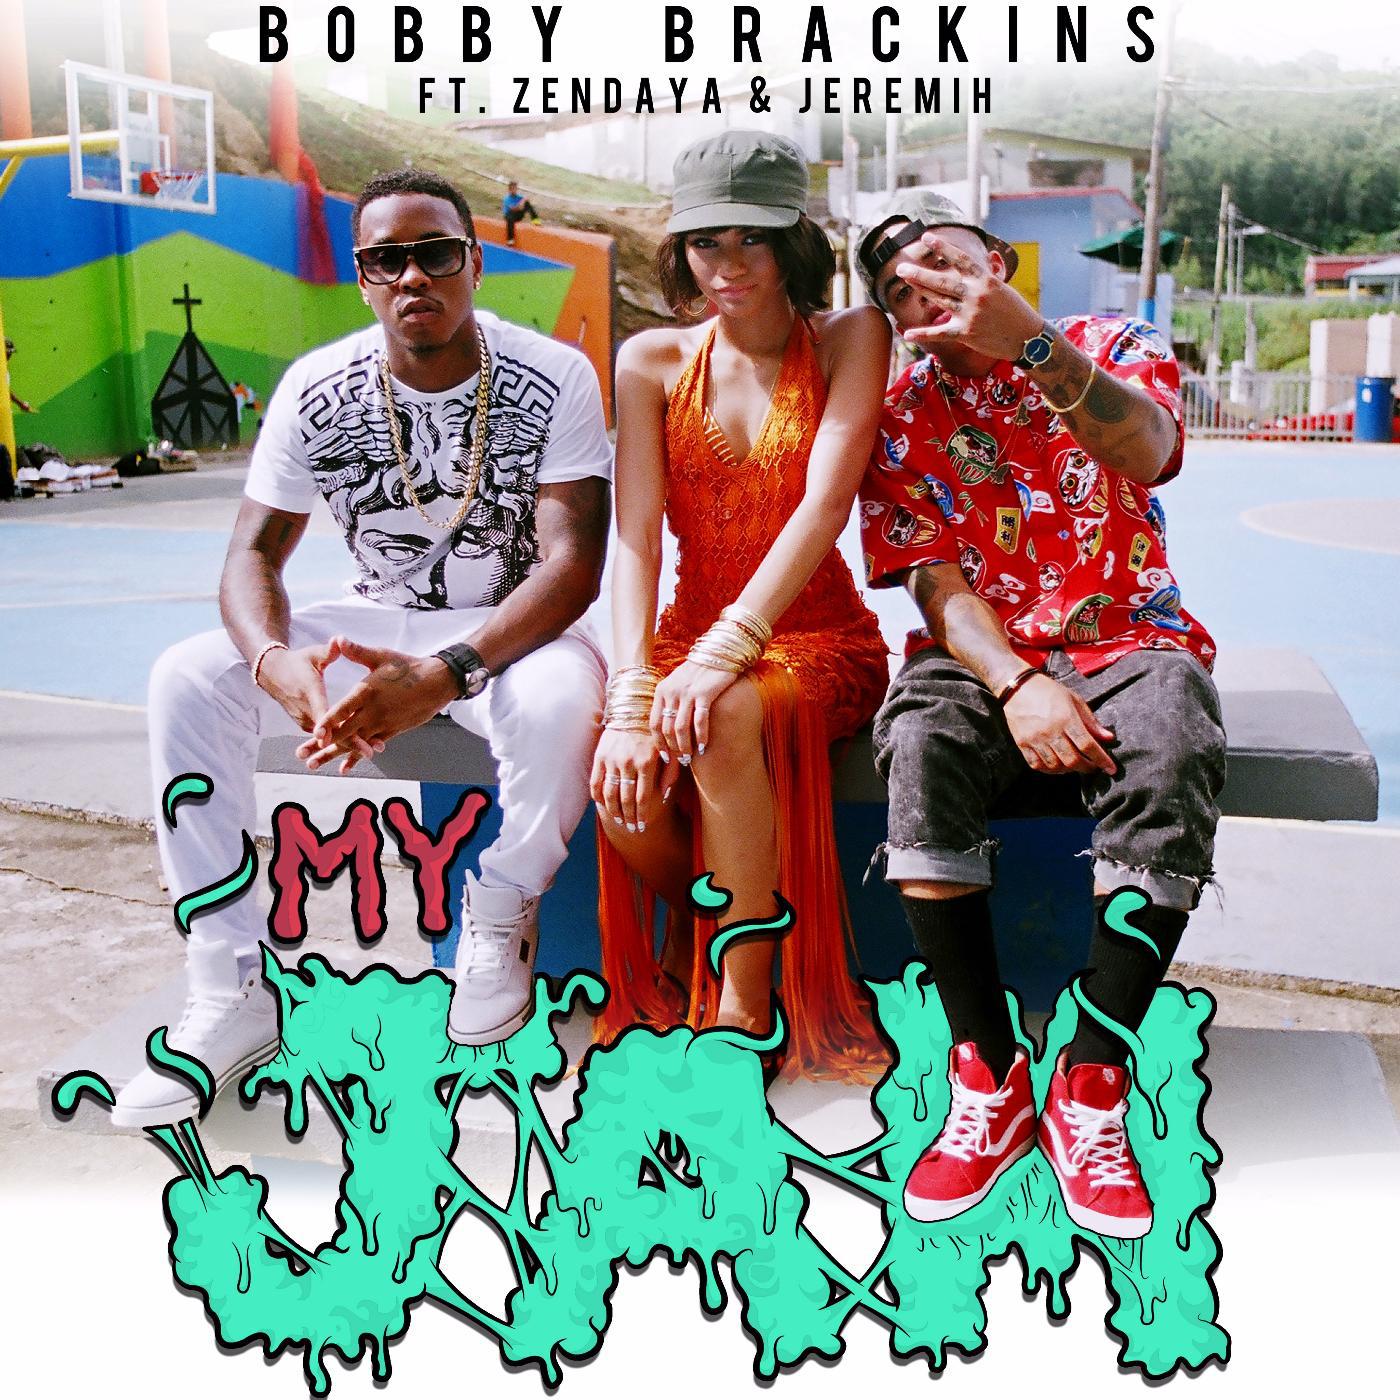 Bobby Brackins - My Jam (feat. Zendaya & Jeremih)